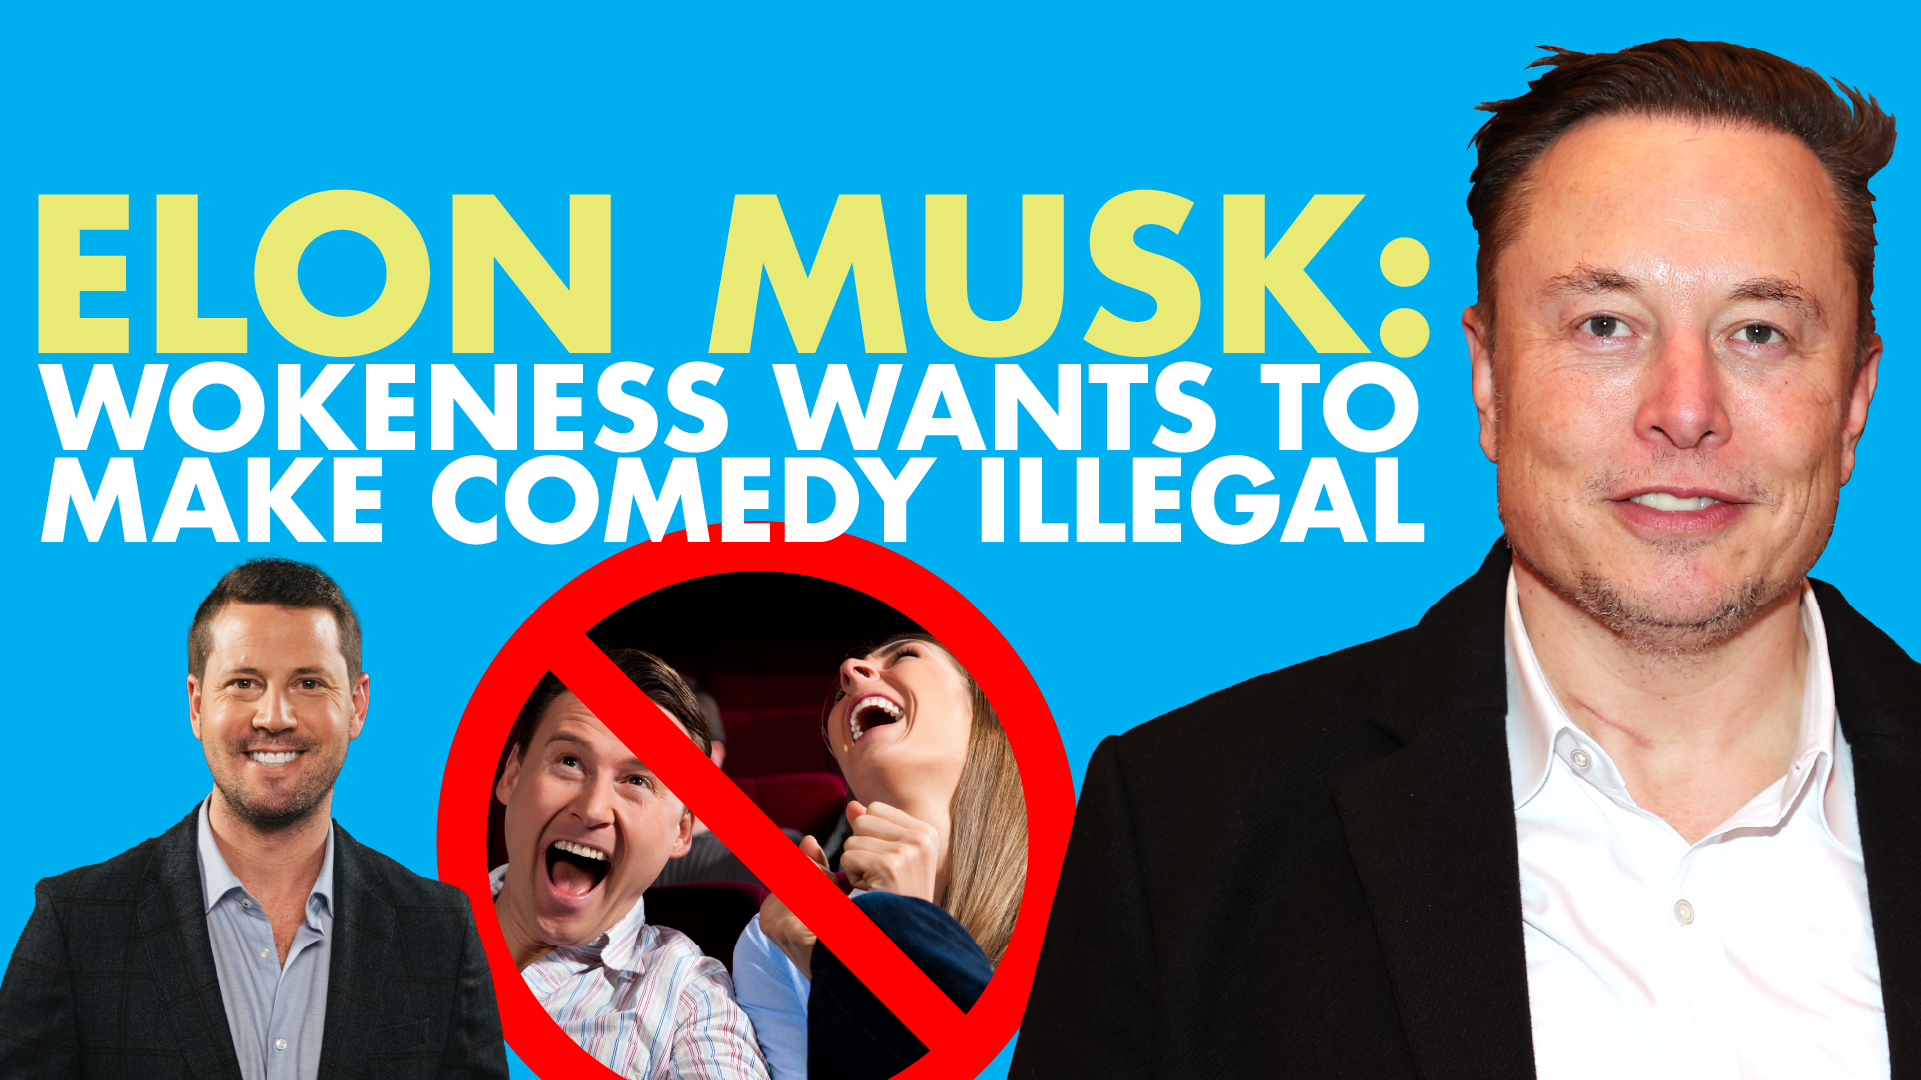 Elon Musk: Wokeness Wants to Make Comedy Illegal